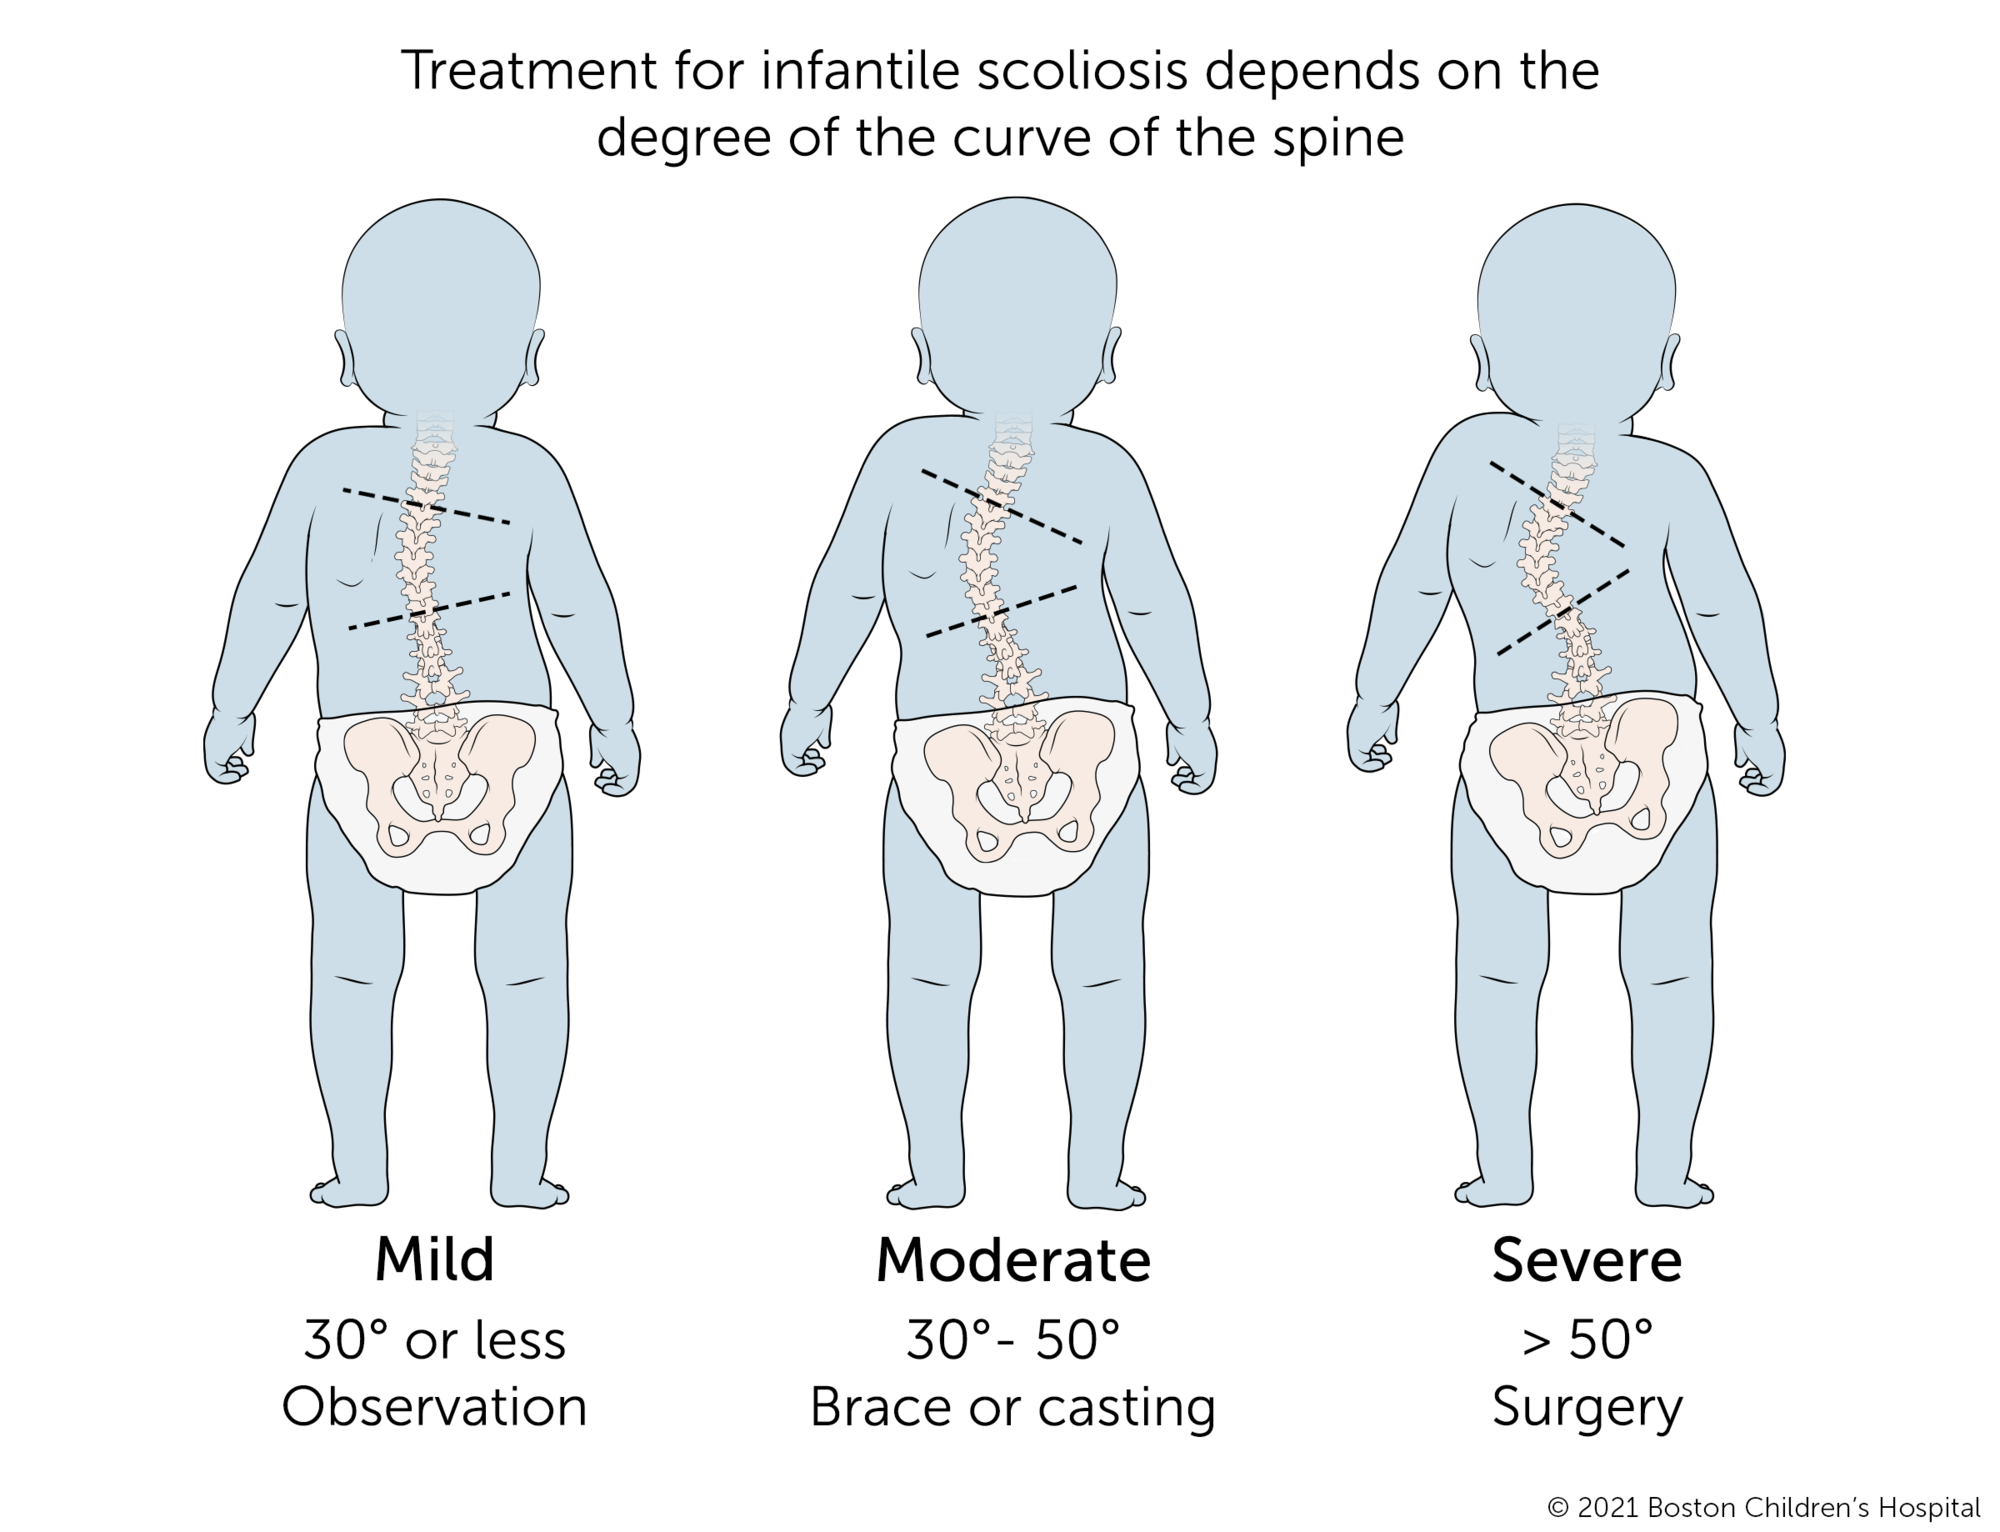 Comparison of mild, moderate, and severe infantile scoliosis. 